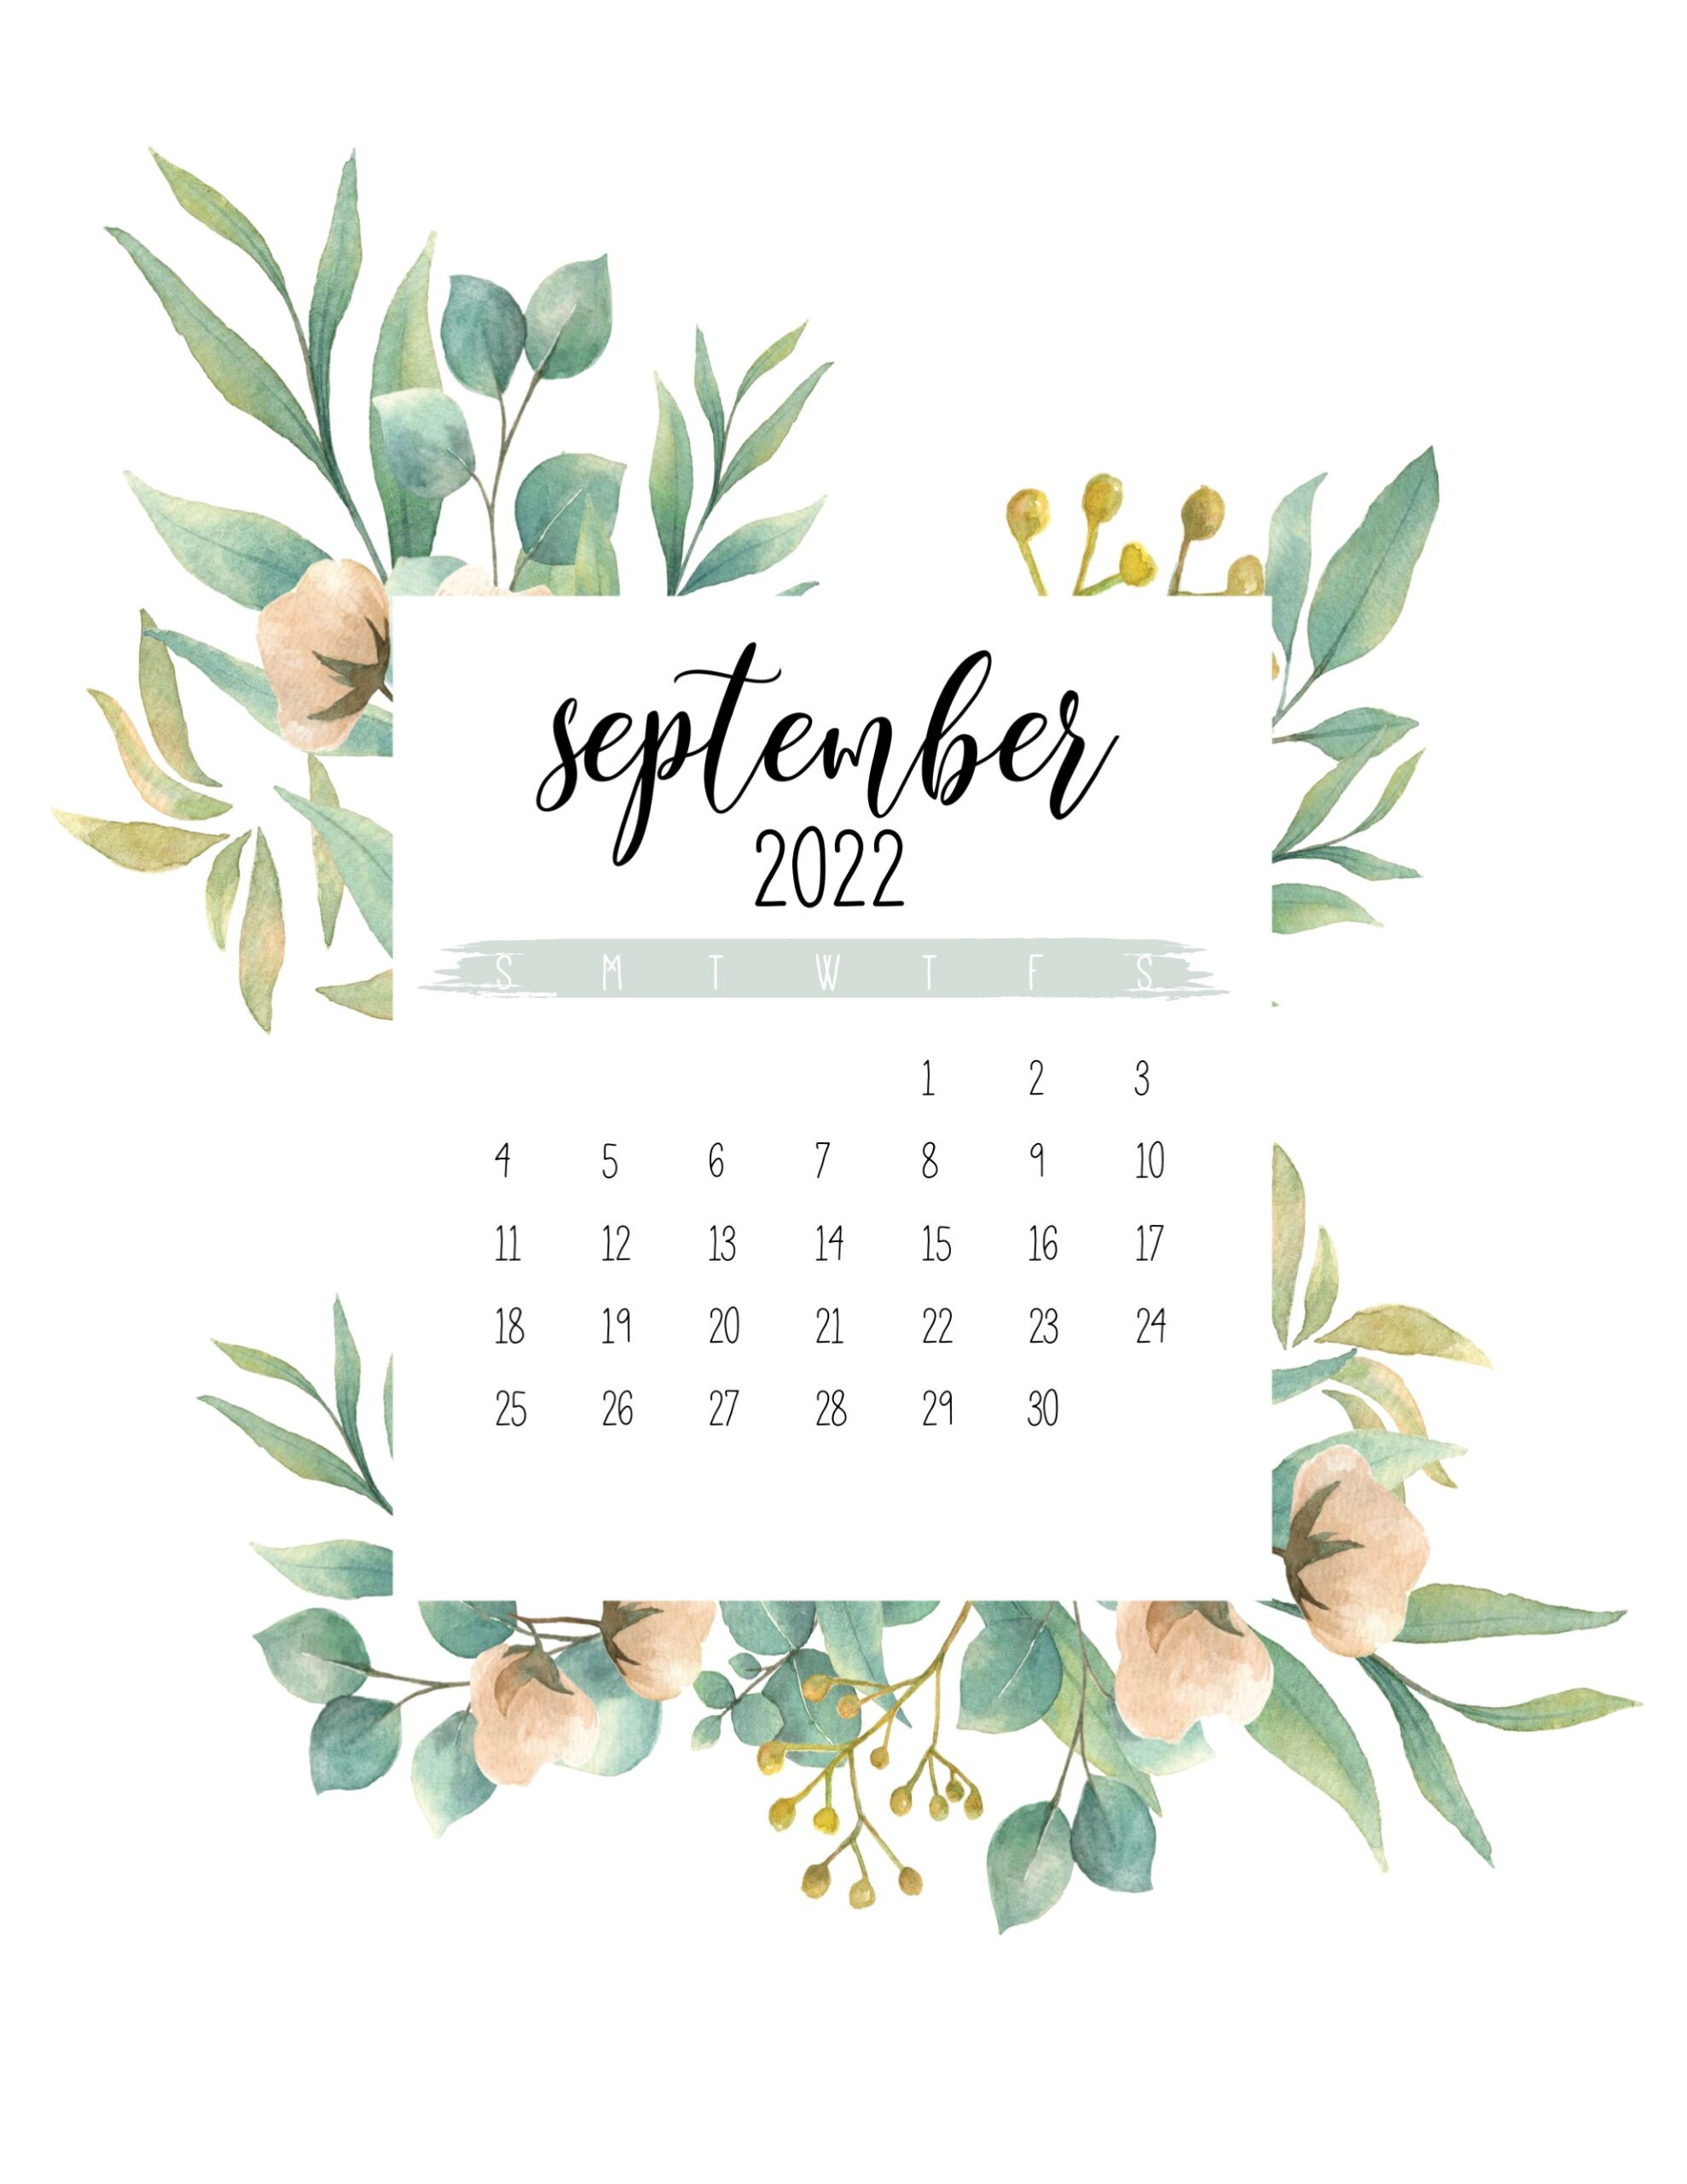 September 2022 Desktop Calendar Free Printable September 2022 Calendars - World Of Printables